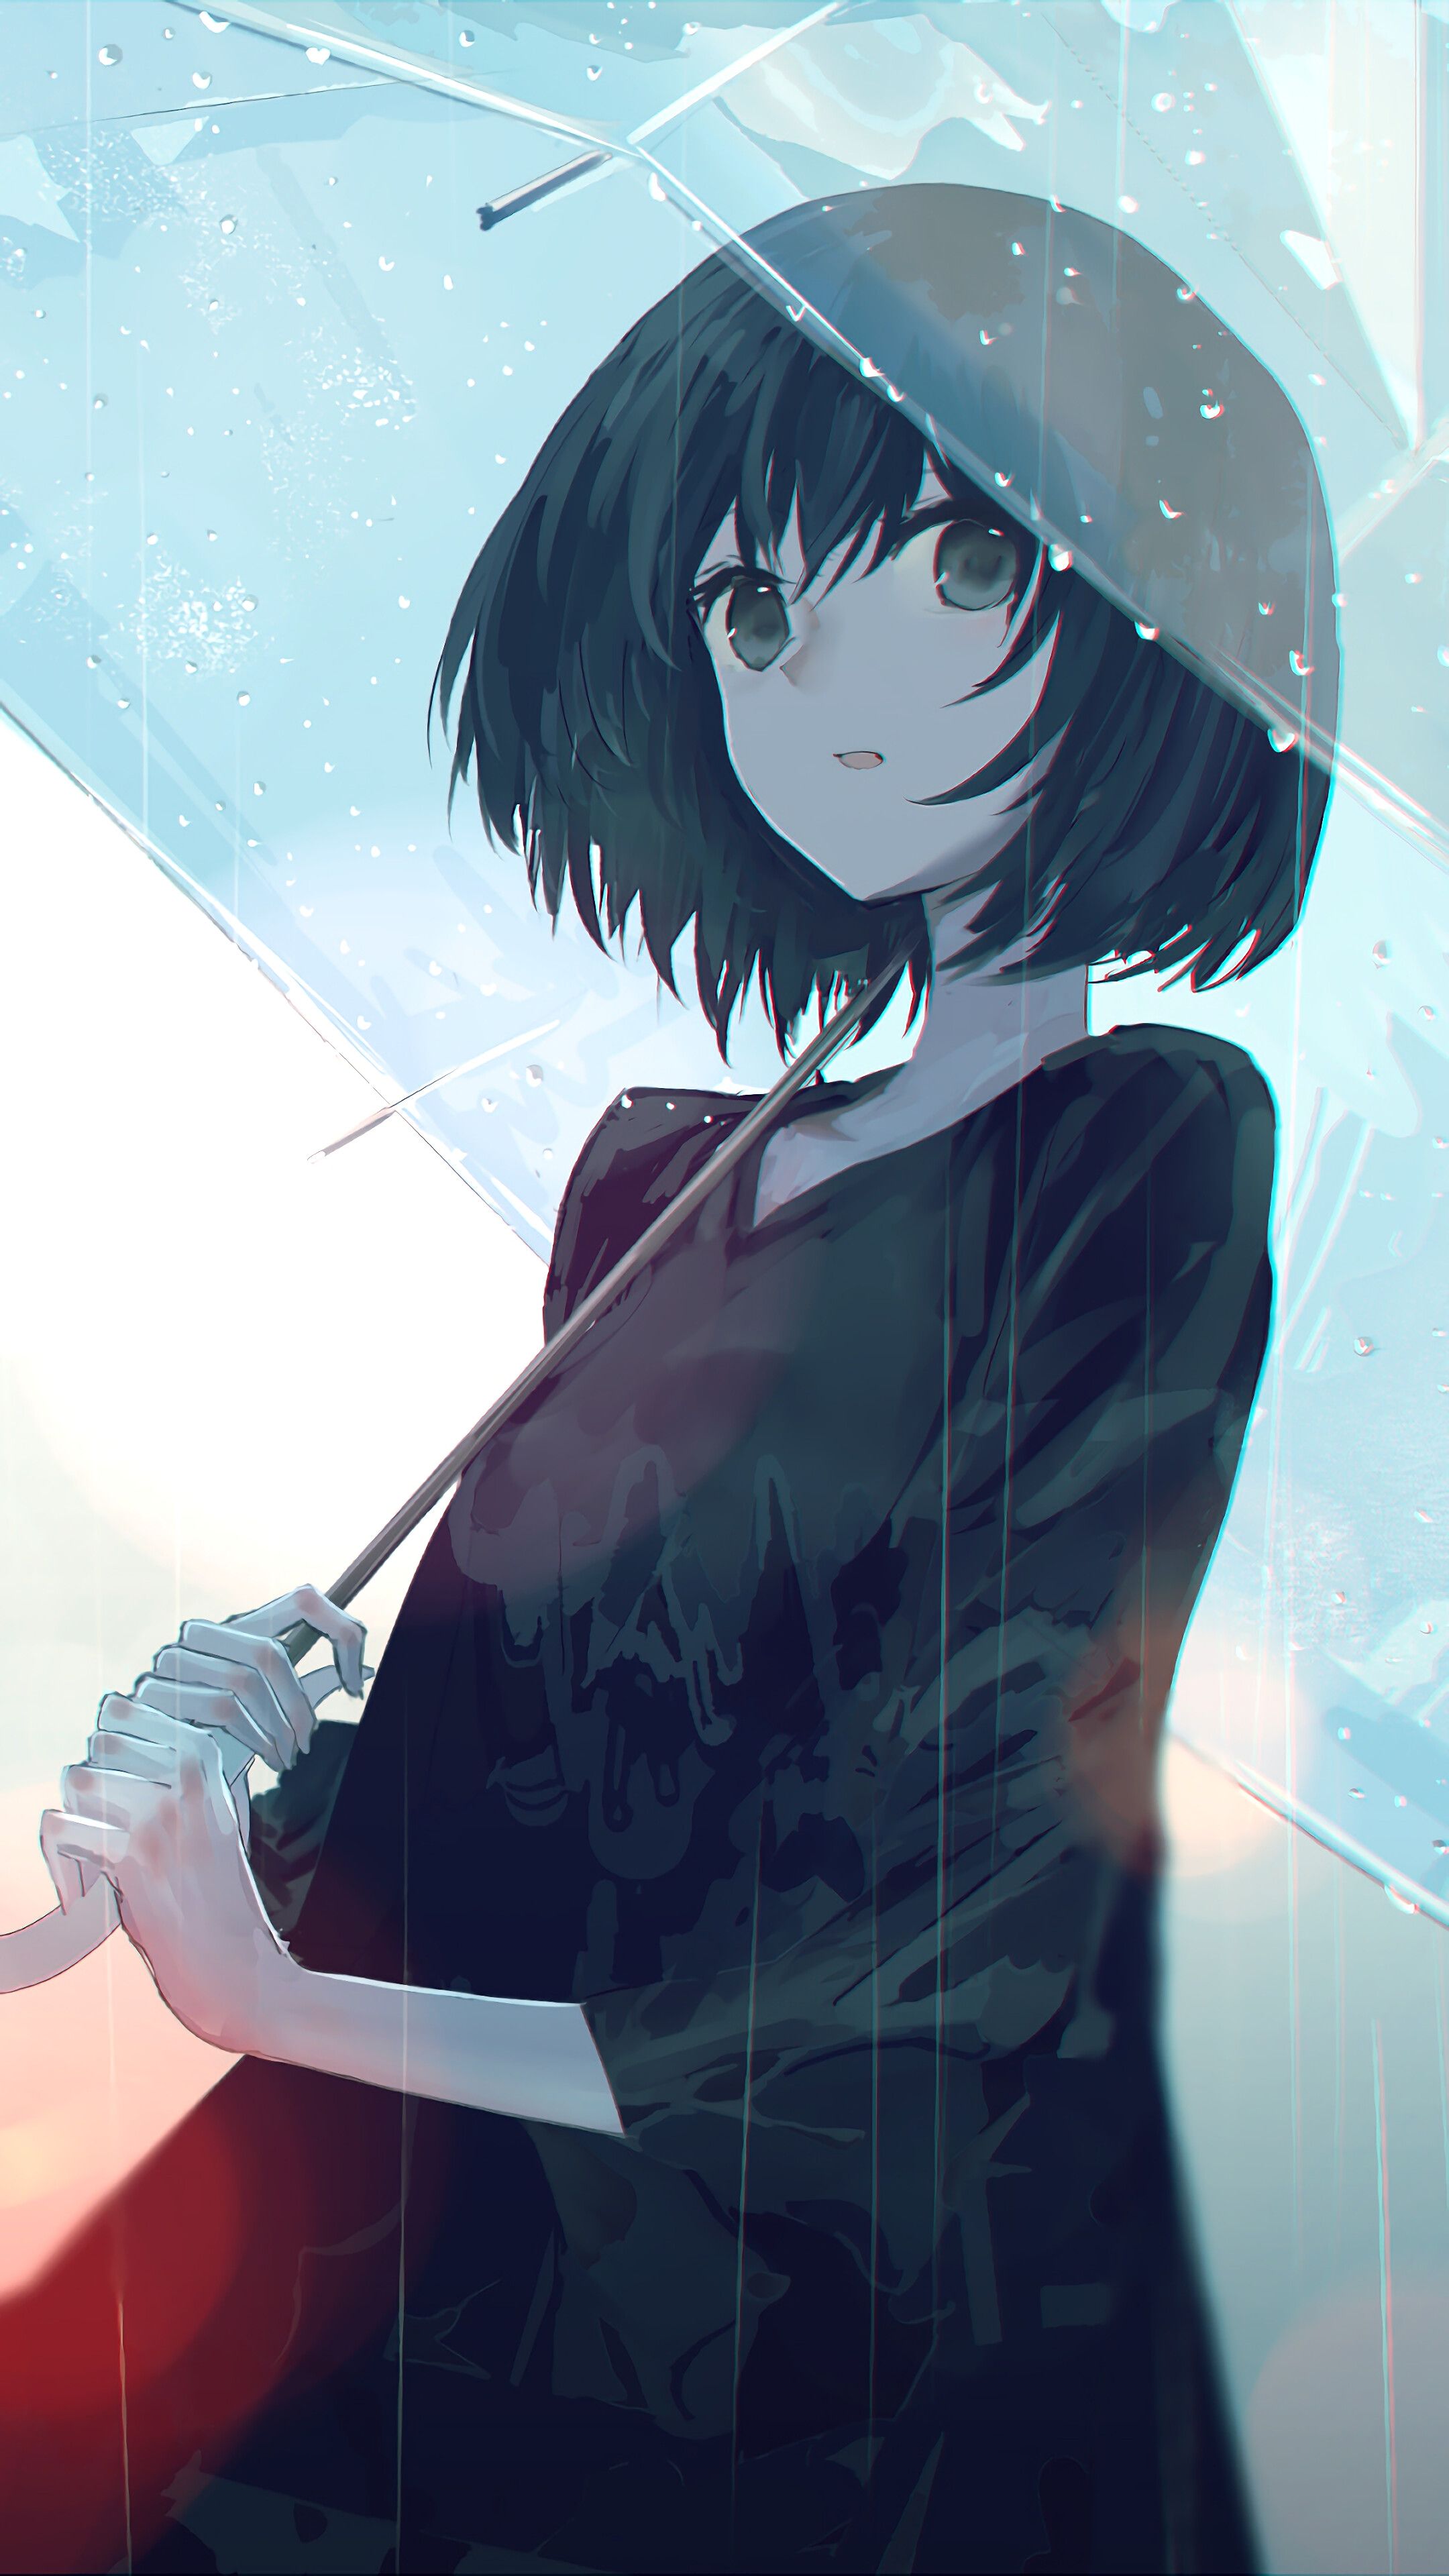 Anime, Girl, Rain, Umbrella, 4K phone HD Wallpaper, Image, Background, Photo and Picture. Mocah HD Wallpaper